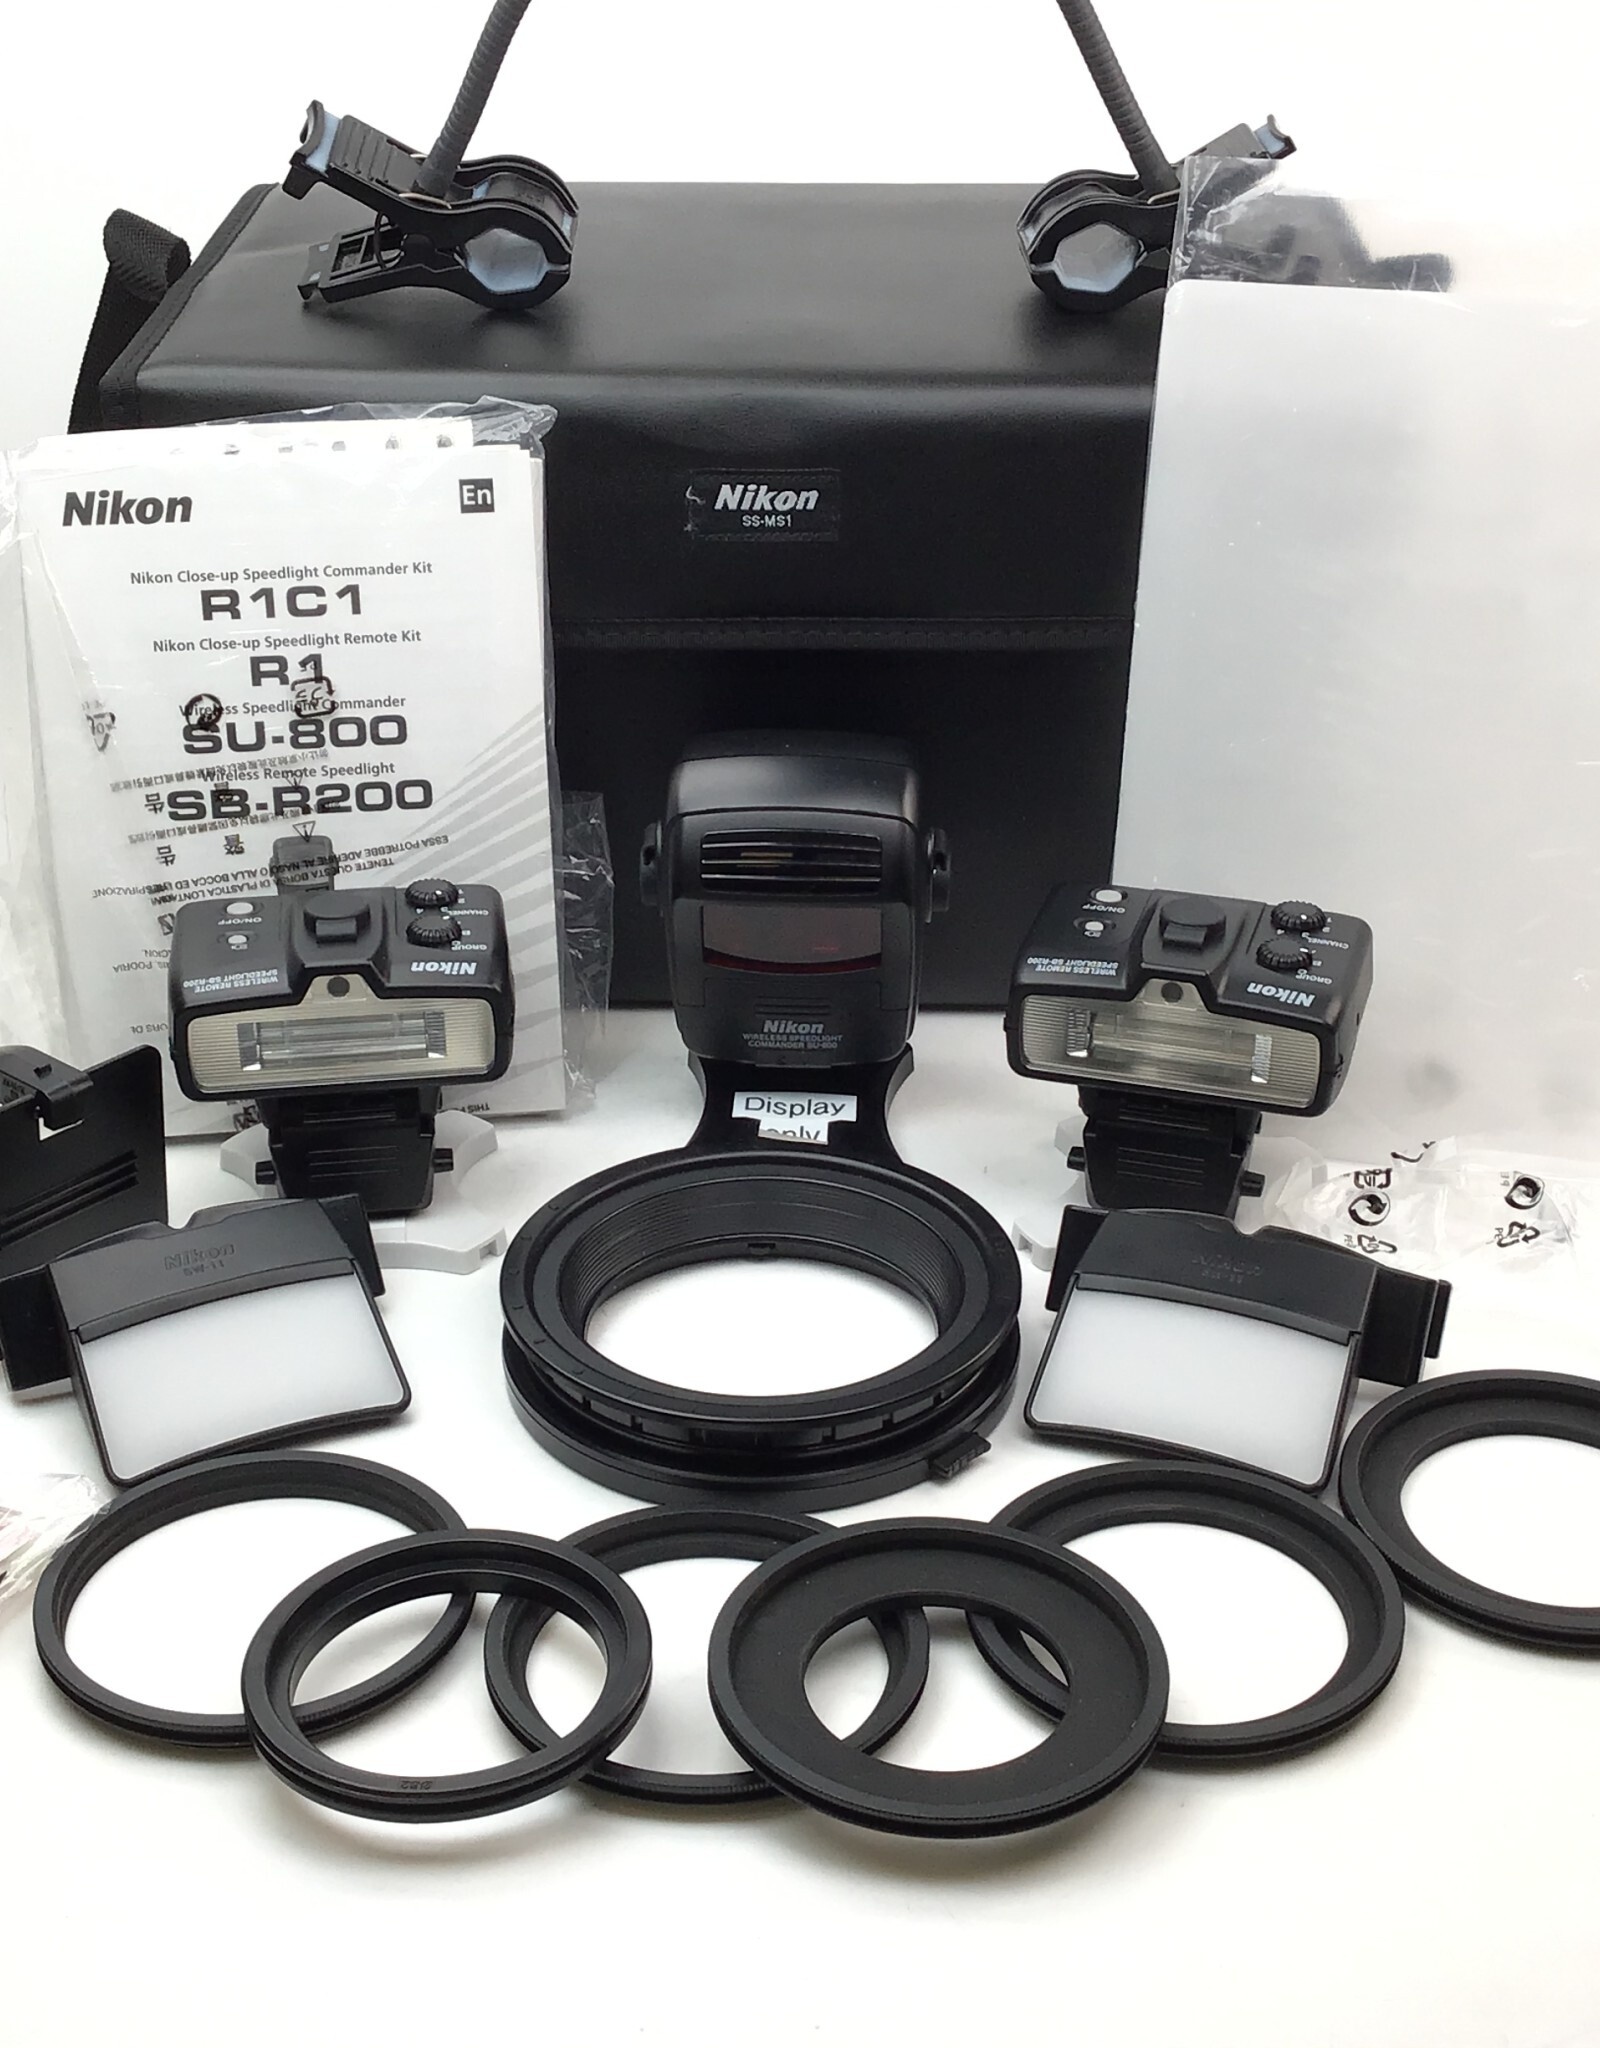 NIKON Nikon R1C1 Close-up Speedlite Comander Kit in Box Used EX